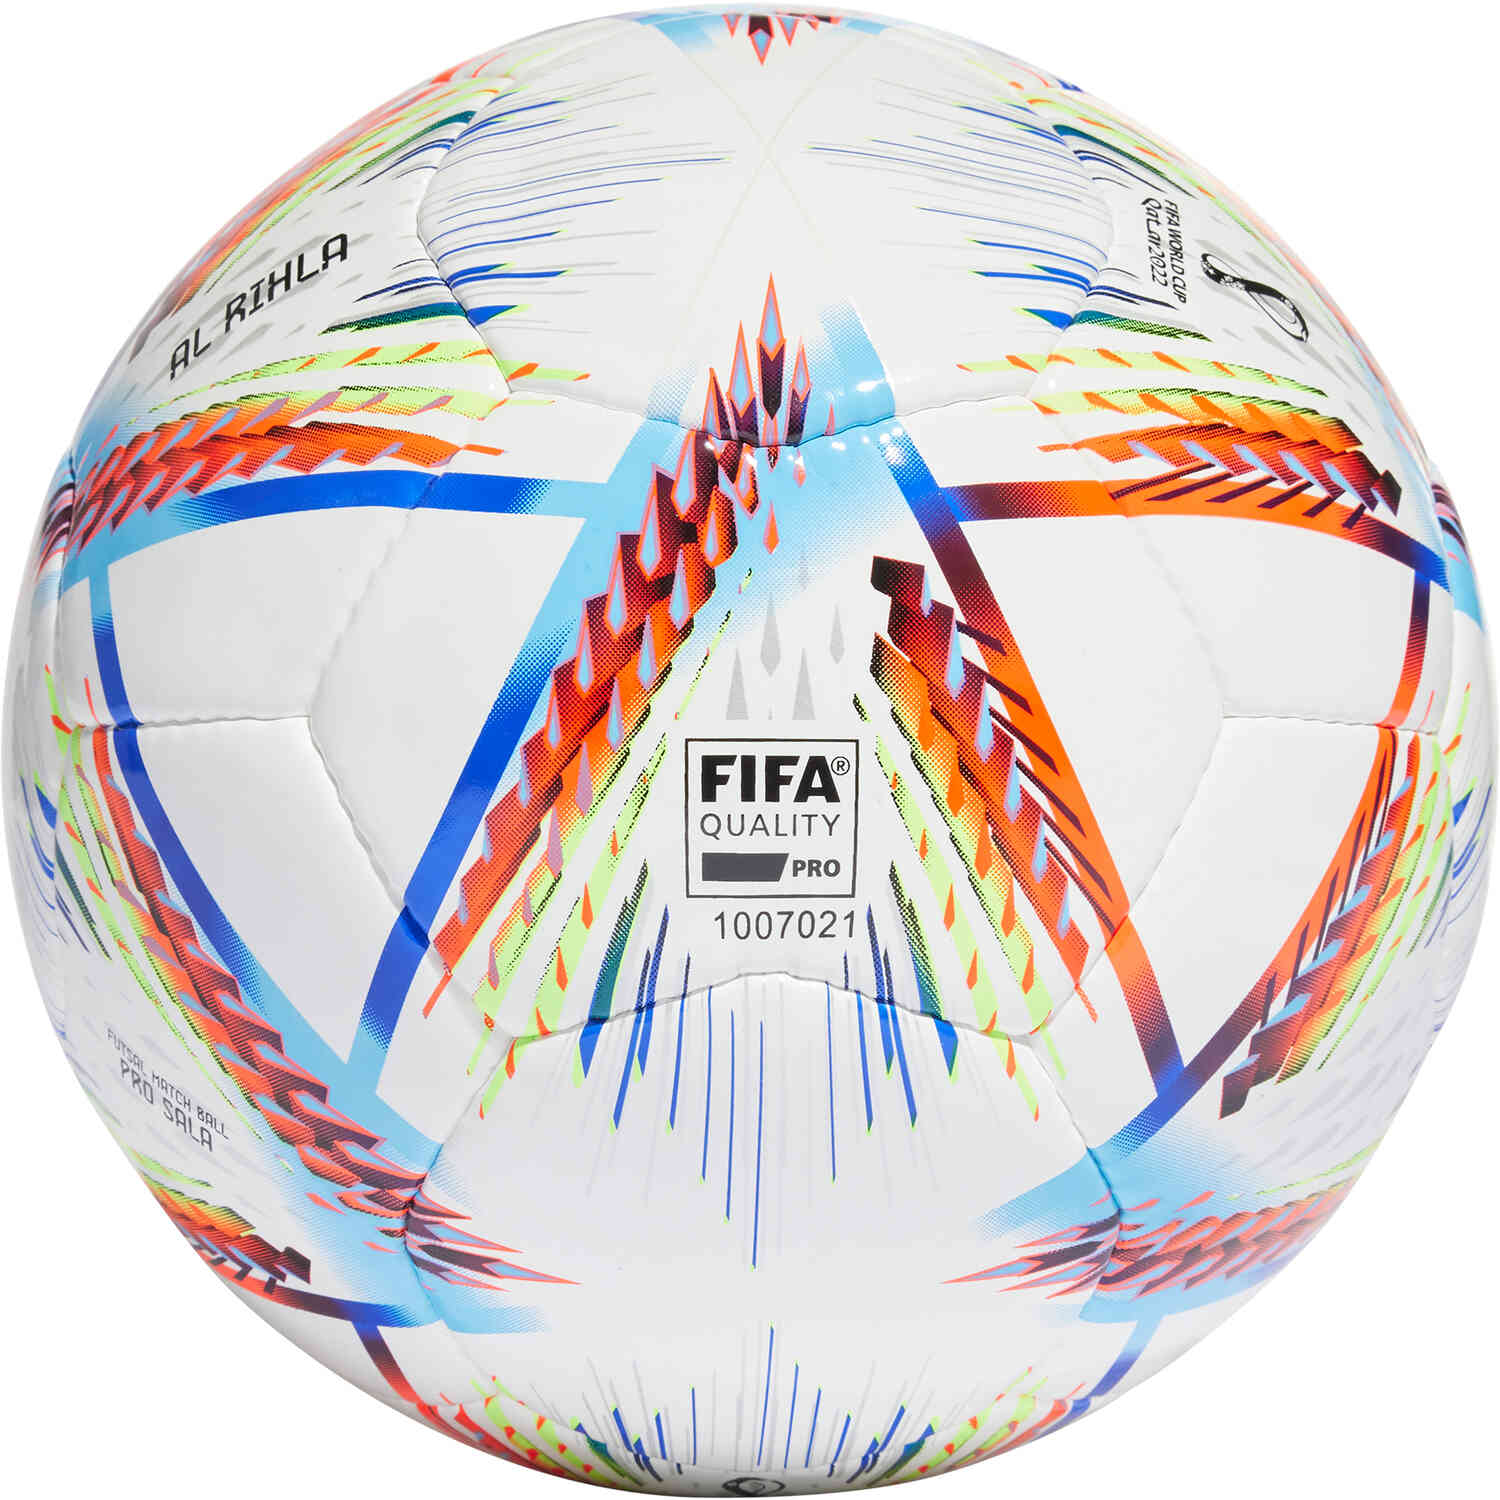 ADIDAS Al Rihla Pro Football - FIFA World Cup Qatar 2022